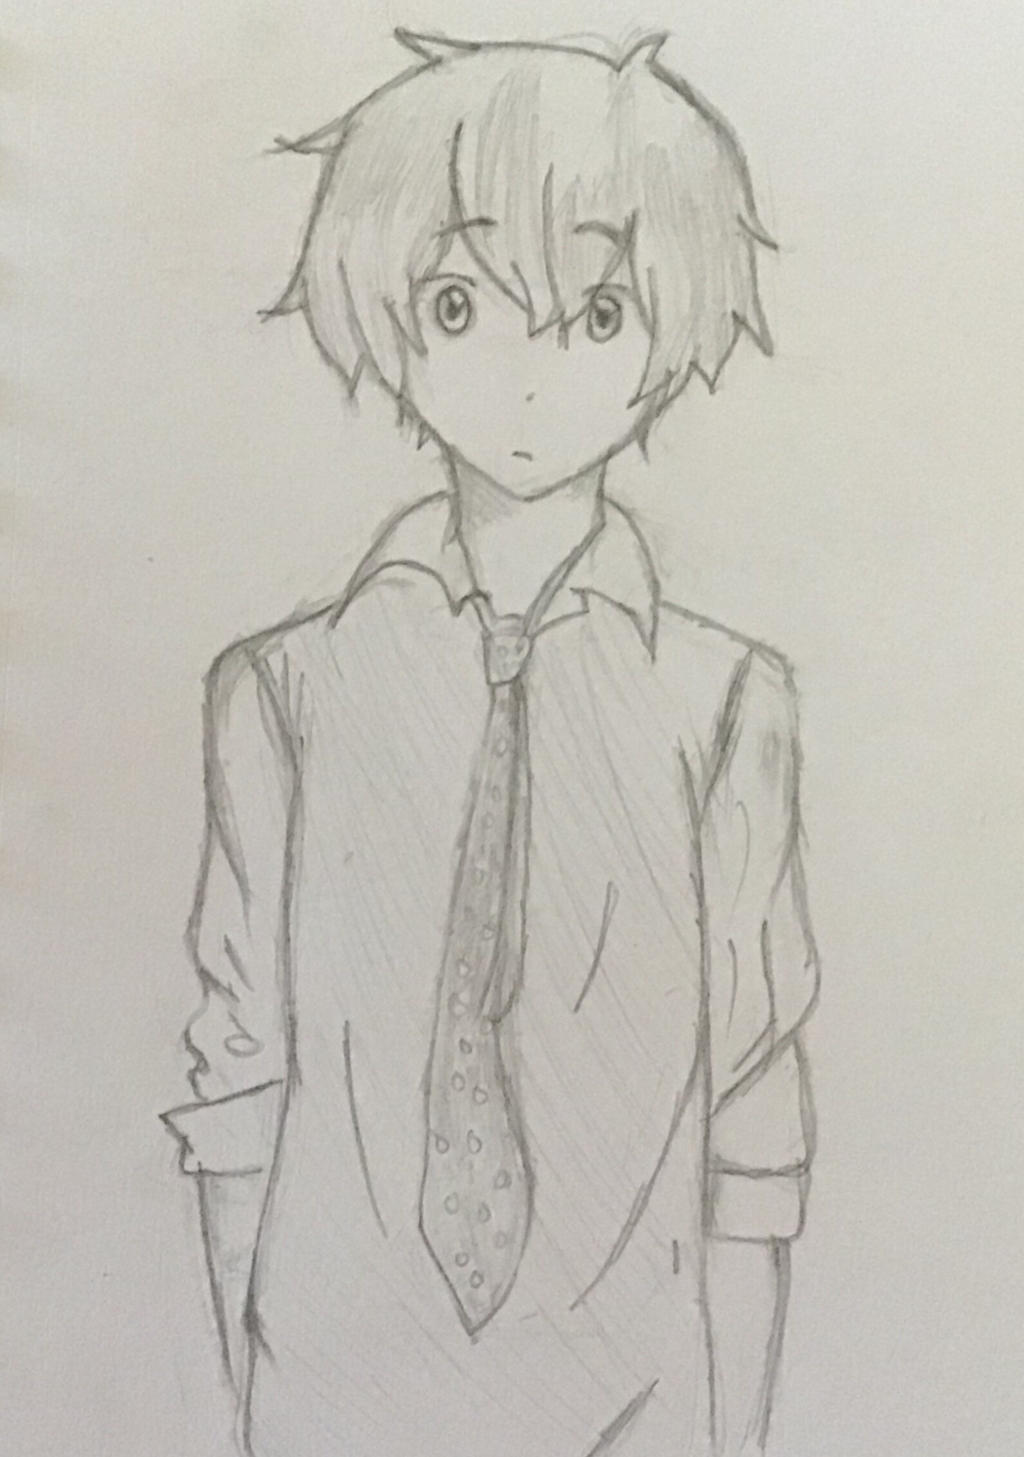 Anime school boy by Artezlect on DeviantArt